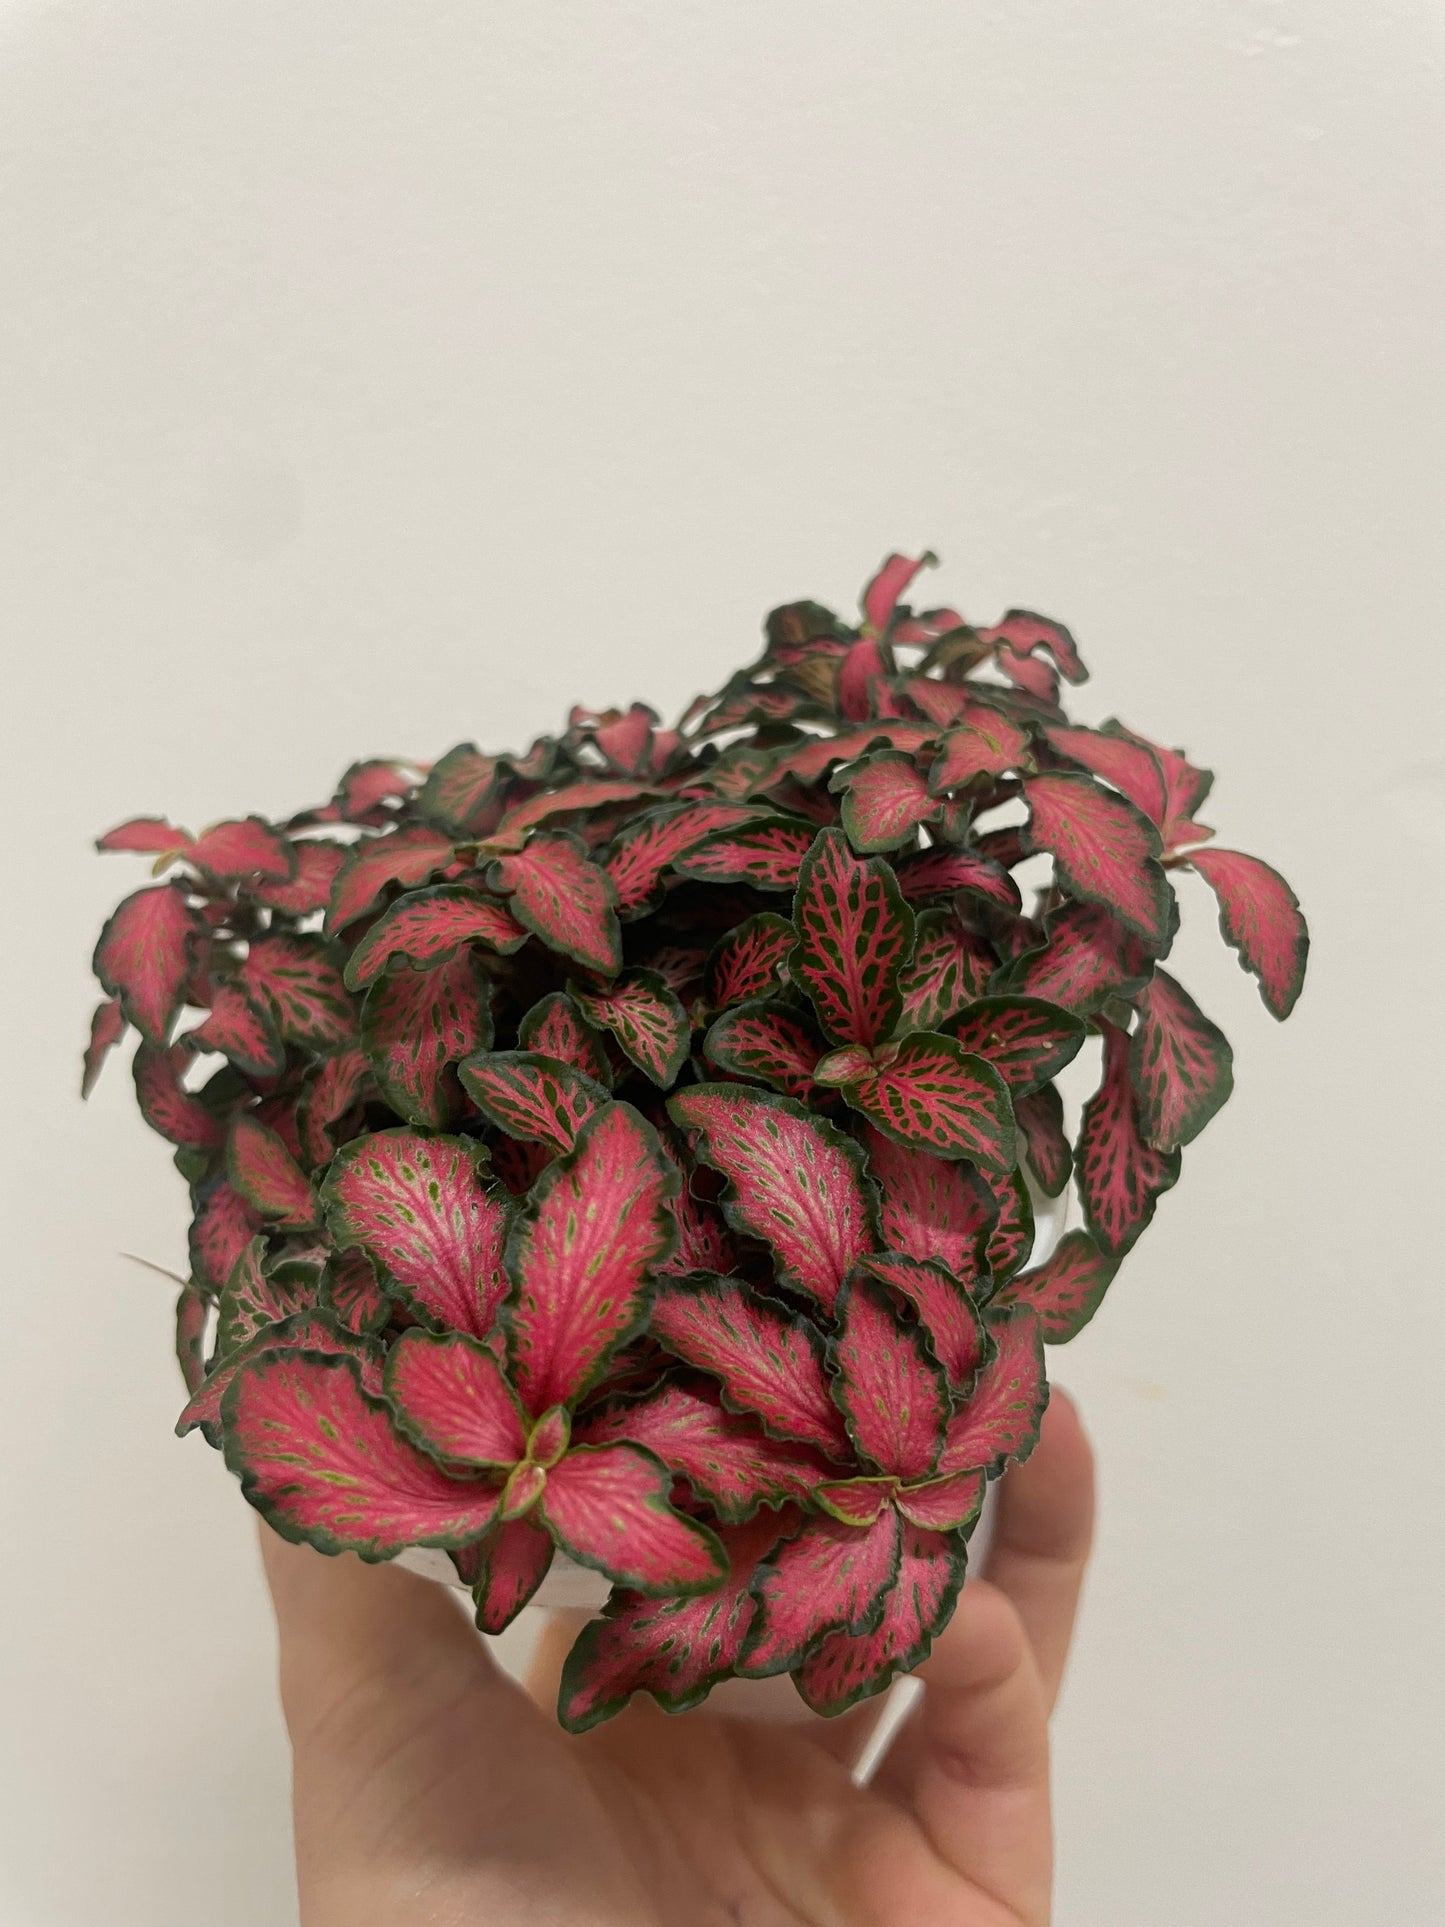 Fittonia Nerve Plant